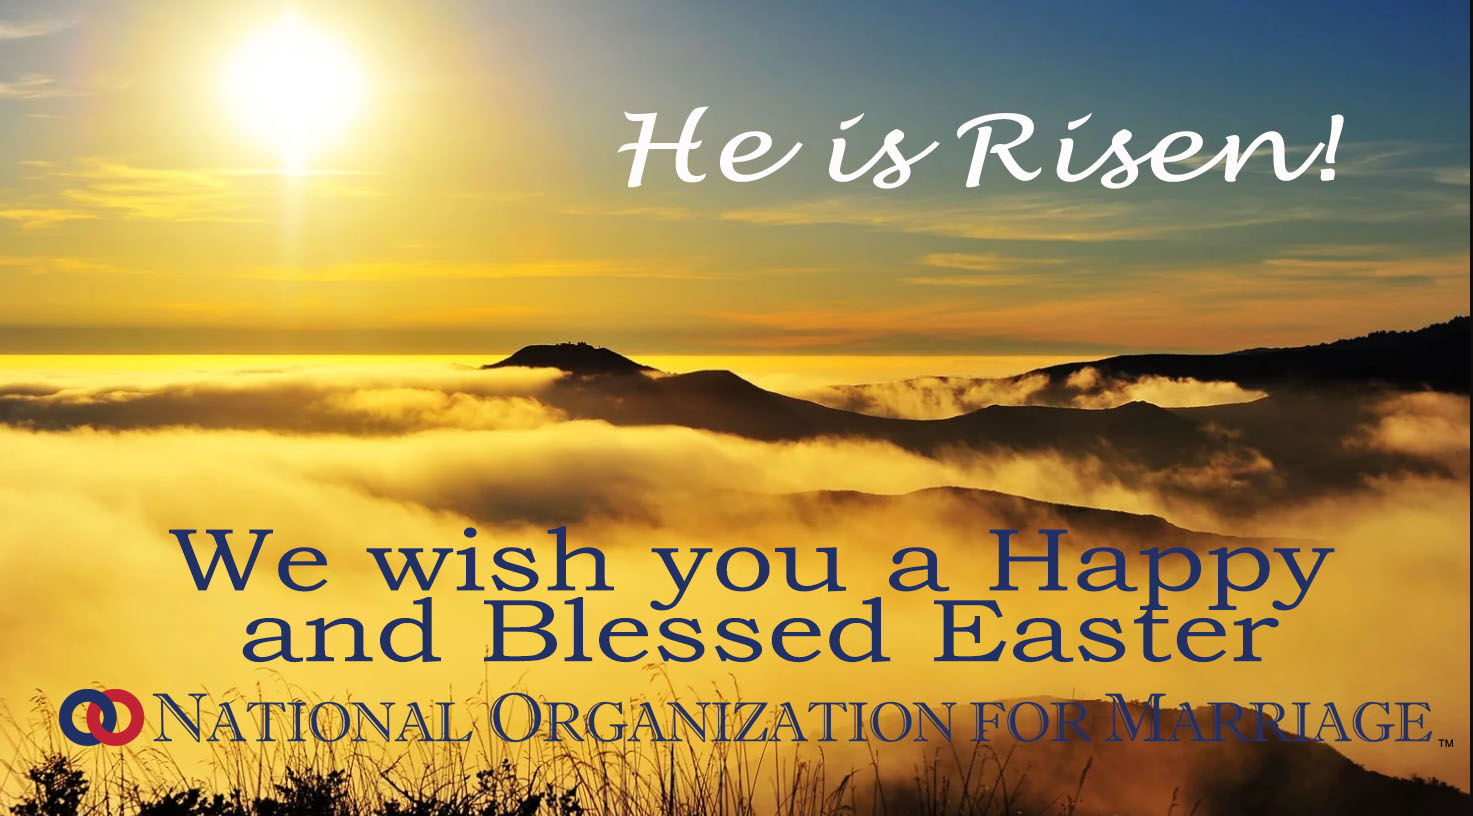 Hi is Risen! Happy Easter!